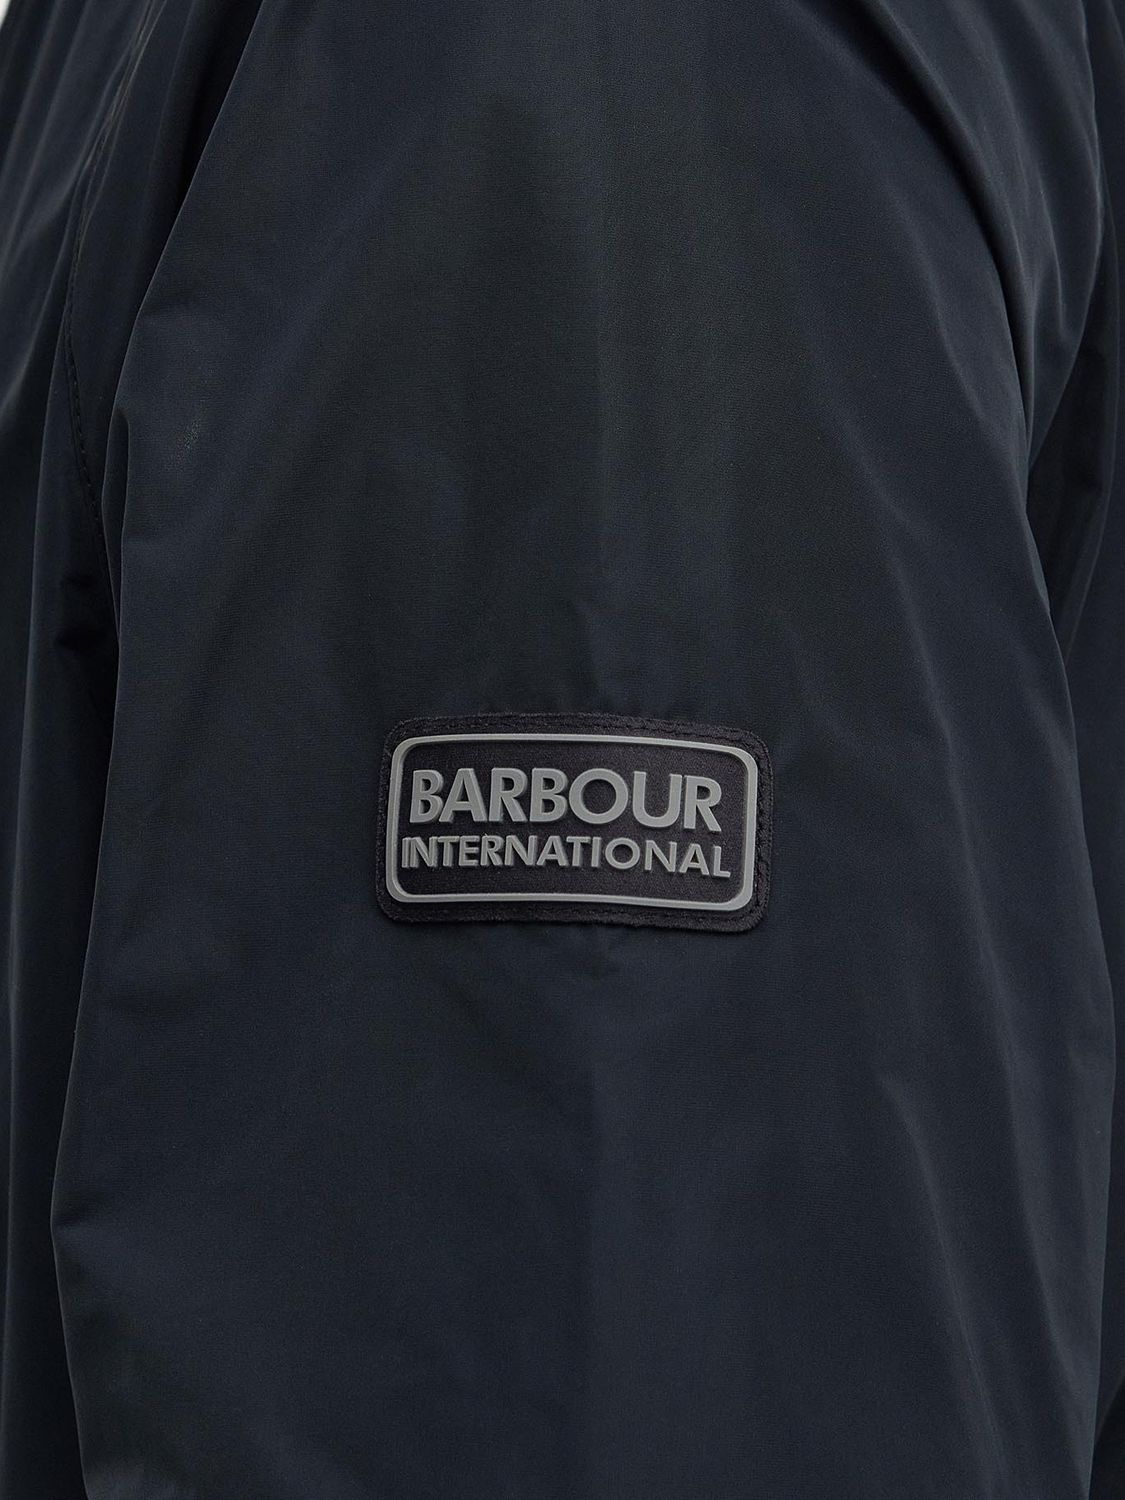 Barbour International Beckett Showerproof Jacket, Black at John Lewis ...